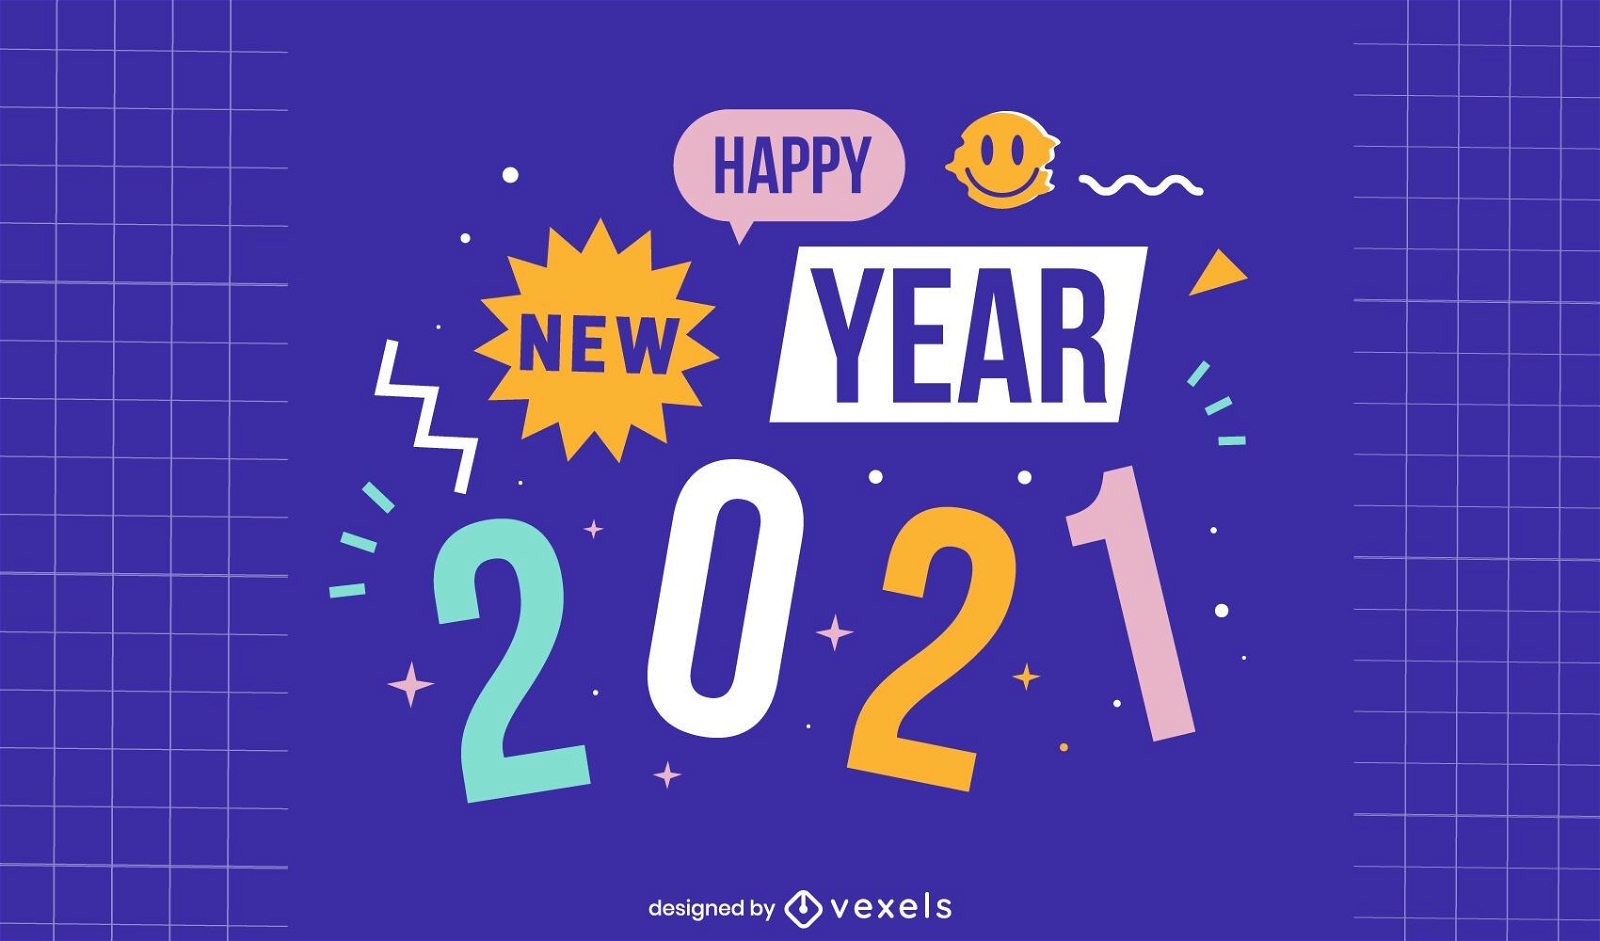 Happy new year 2021 illustration